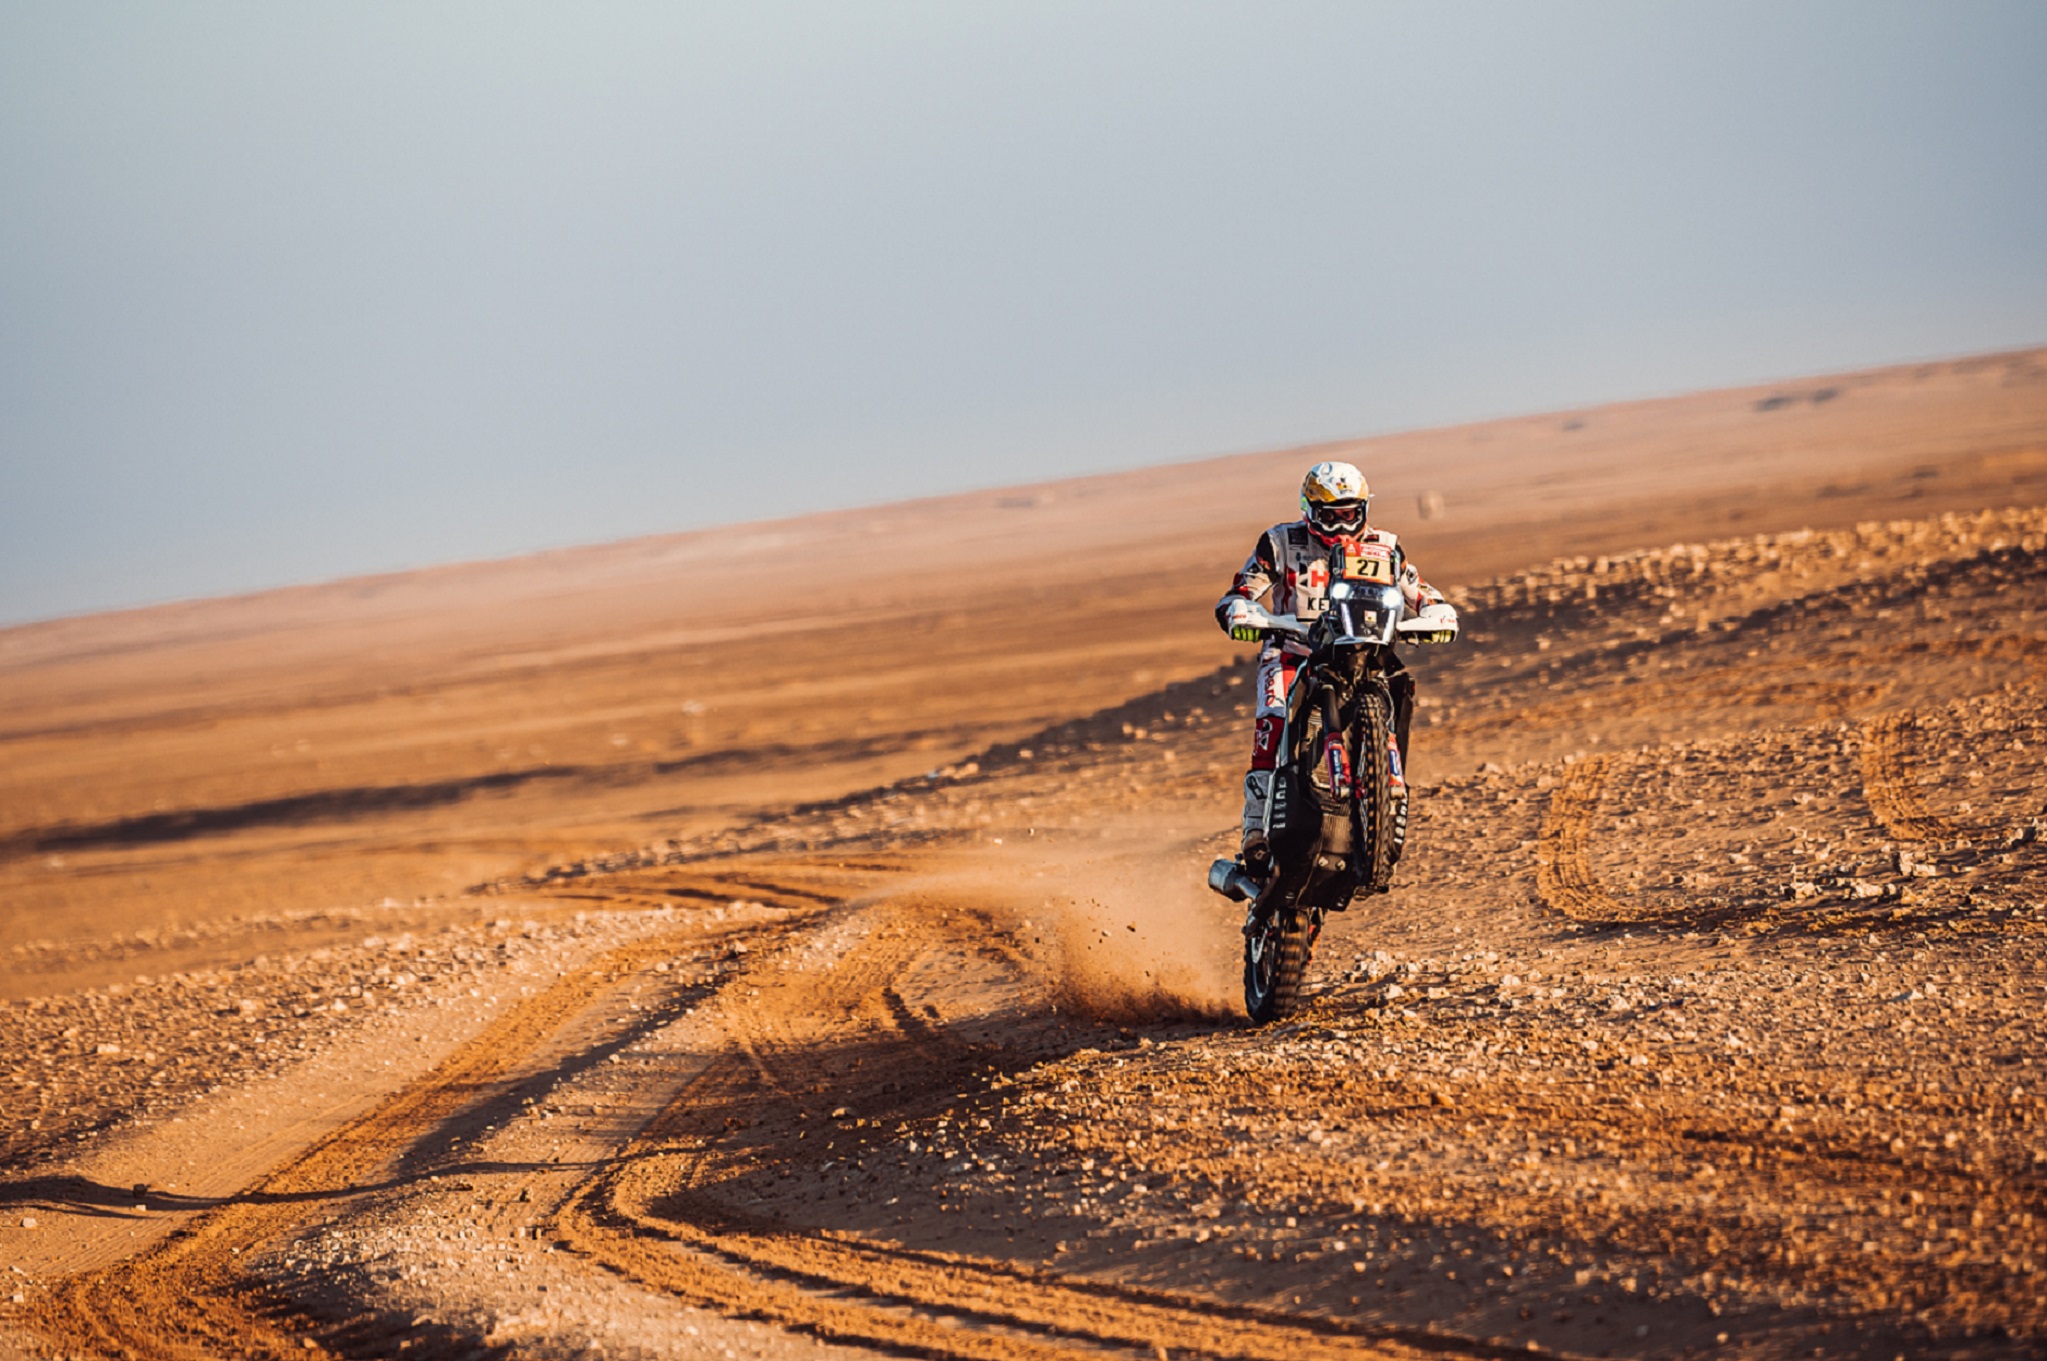 Hero Motosports team rally continues its steady run at the Dakar rally